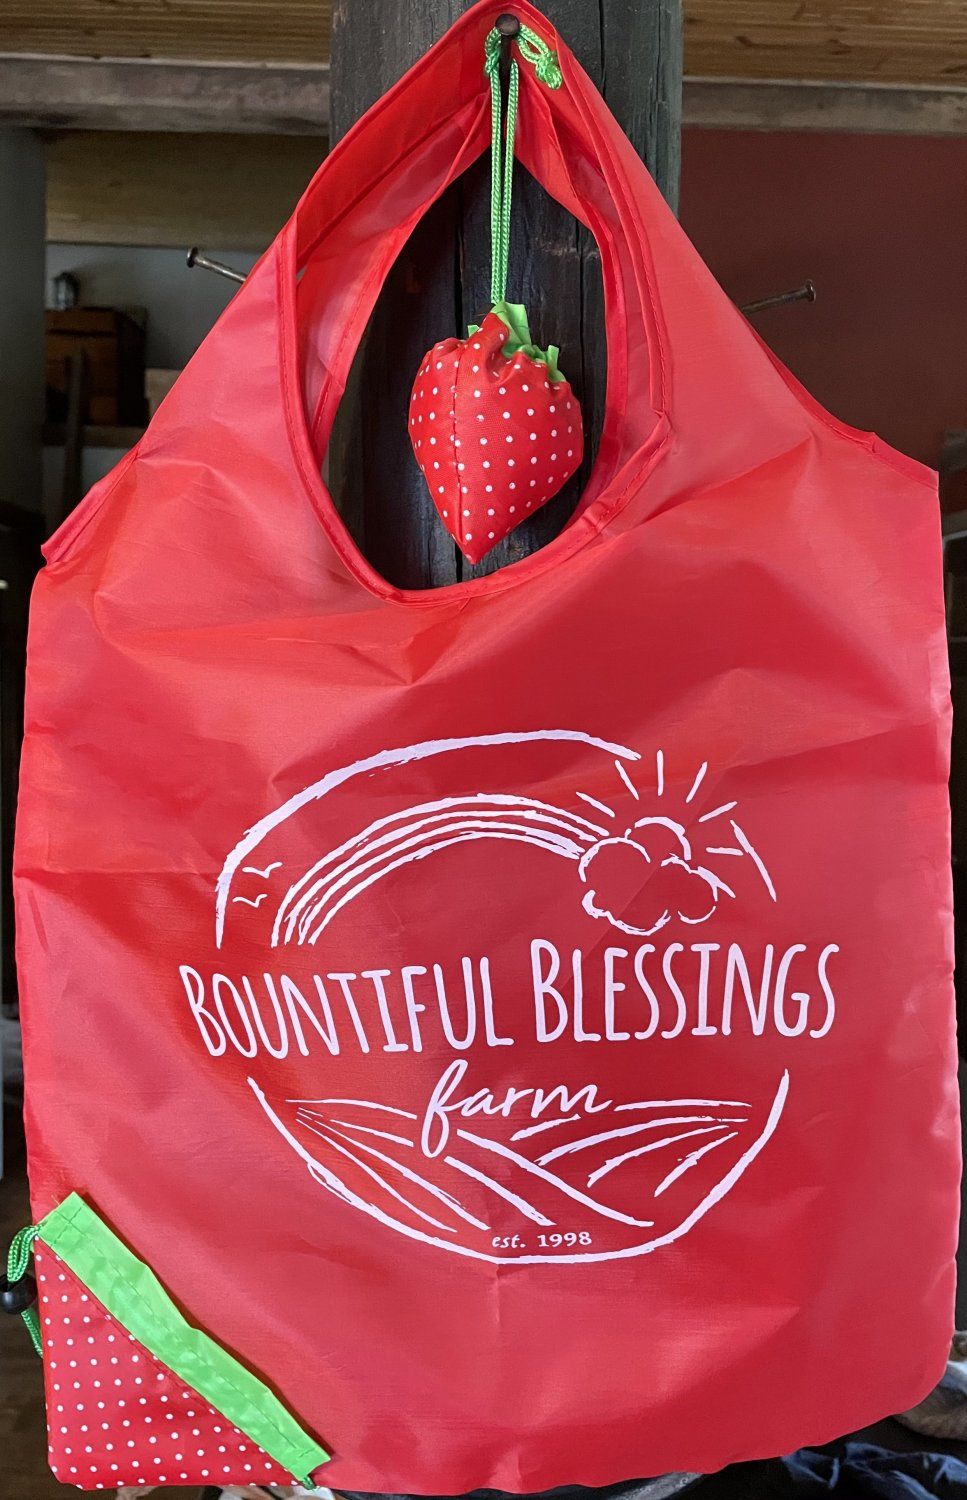 Bountiful Blessings Bags